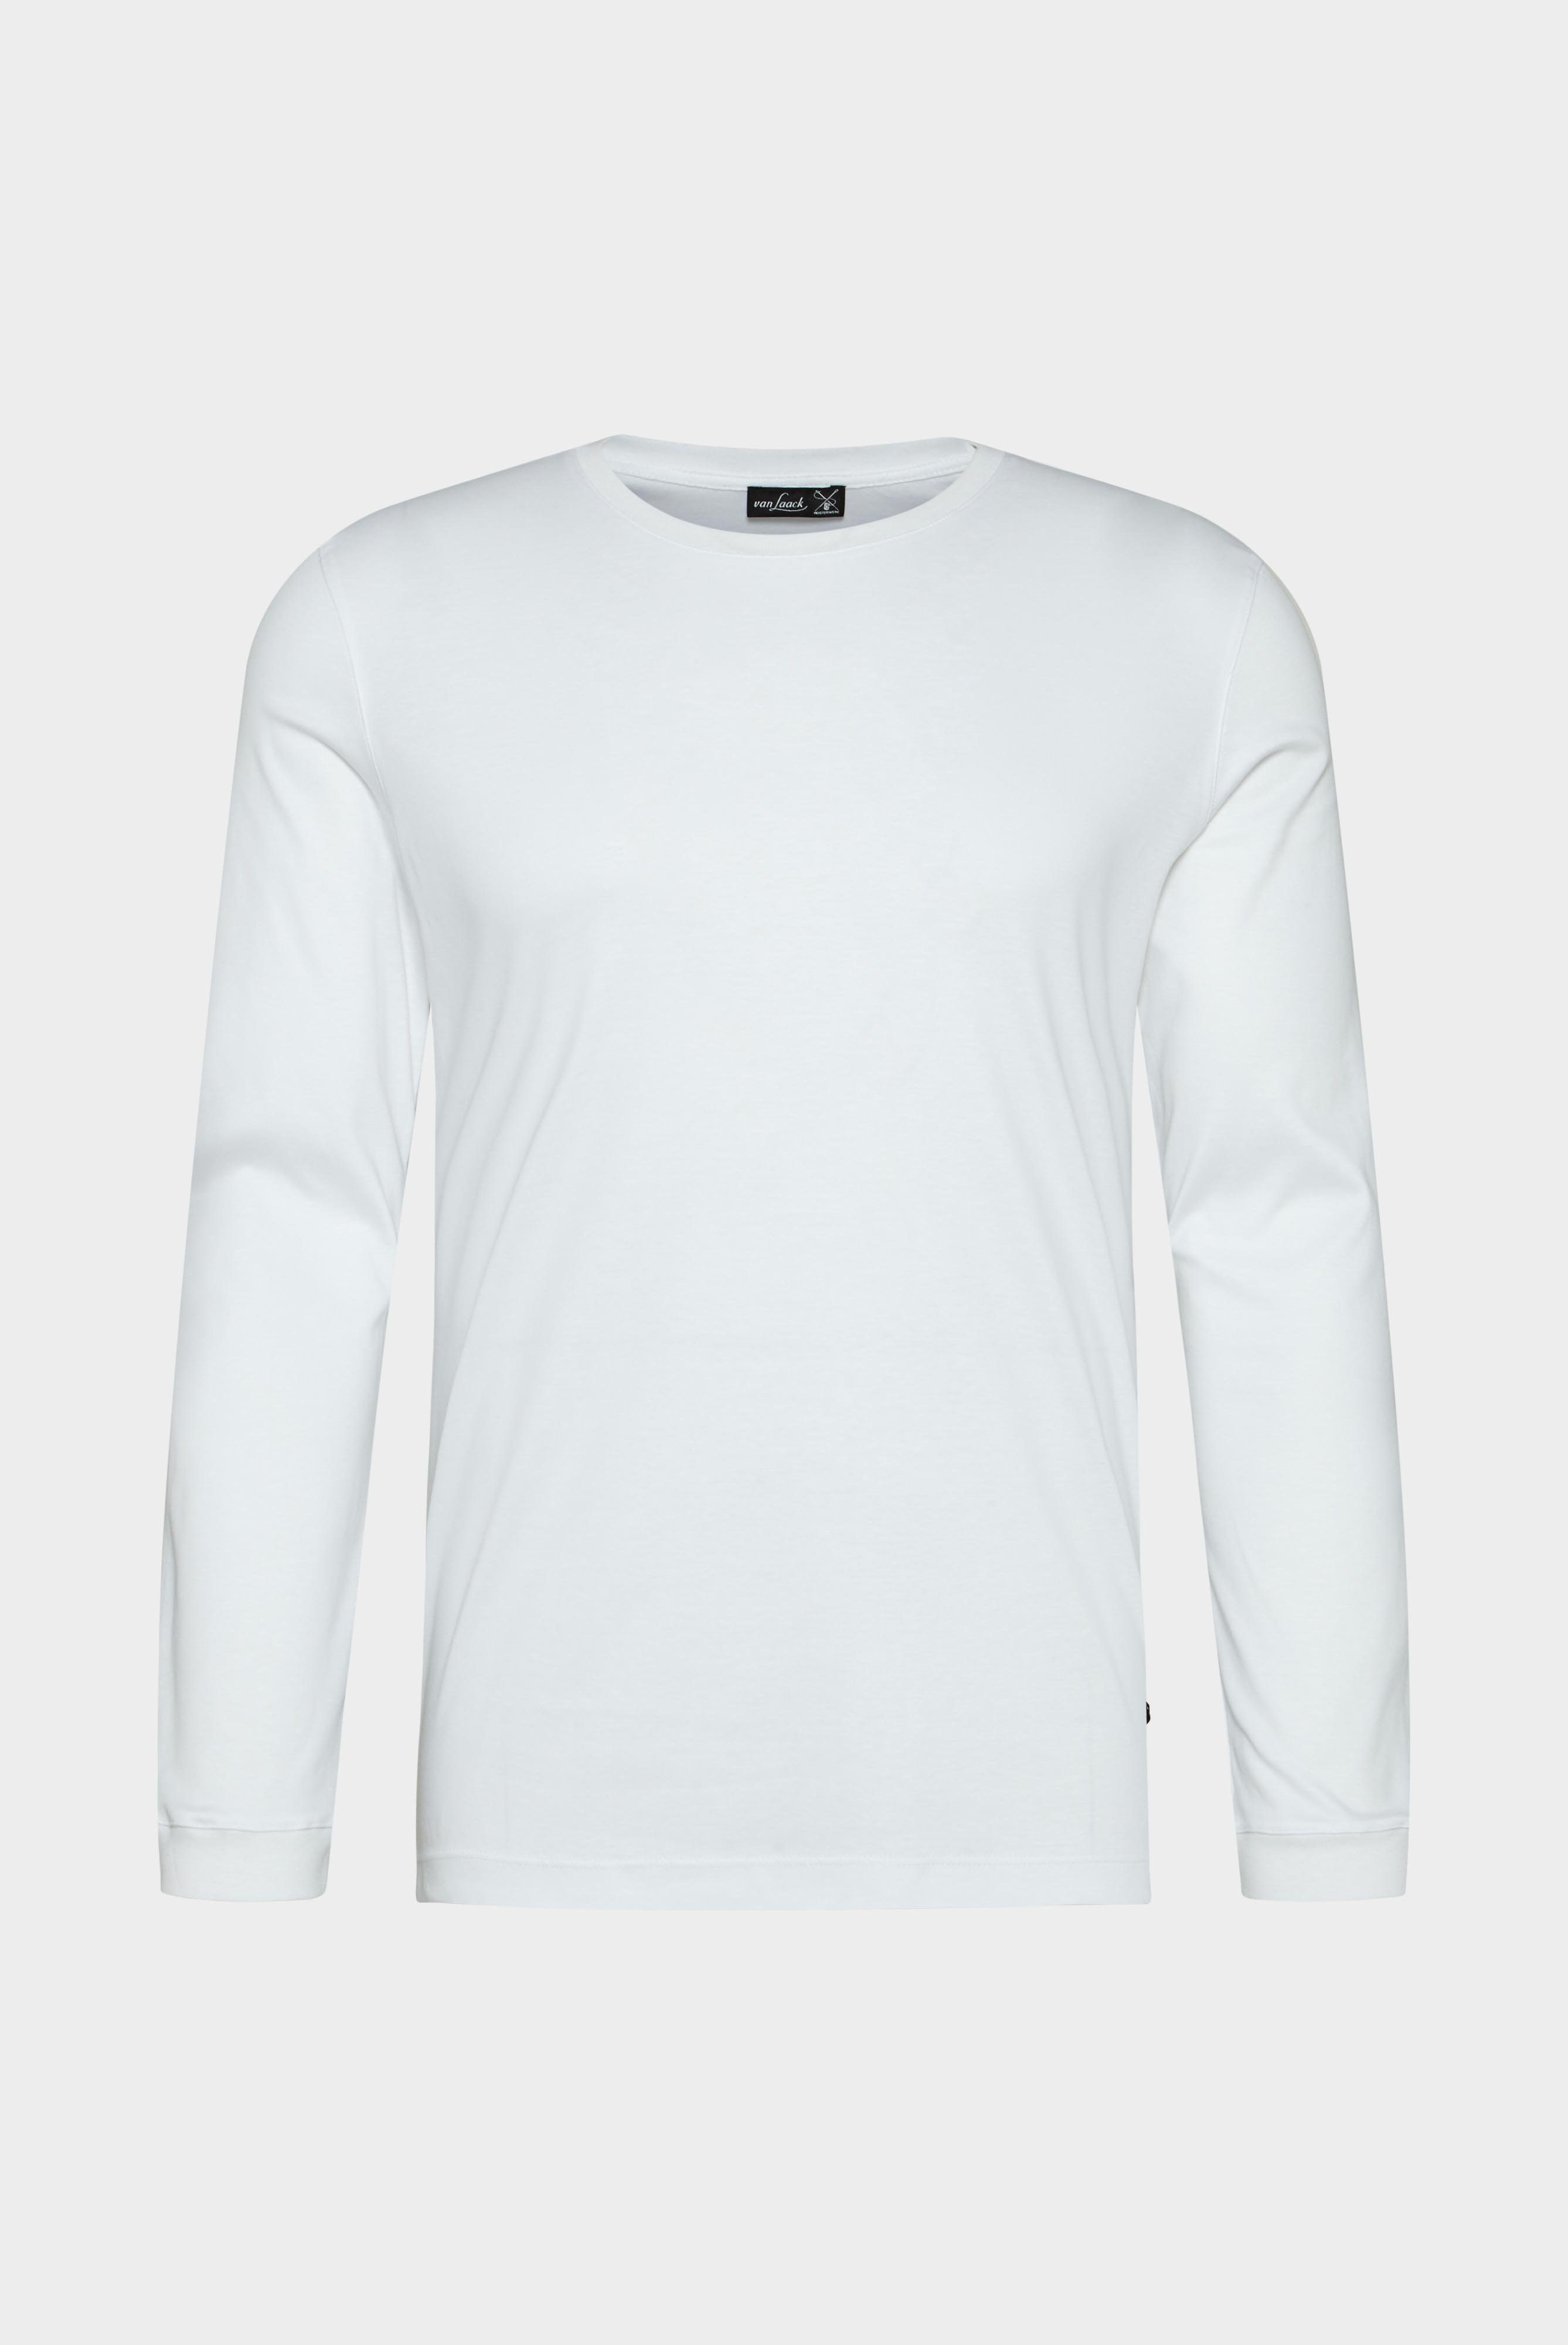 T-Shirts+Langarm Jersey T-Shirt mit Rundhals Slim Fit+20.1718.UX.180031.000.M